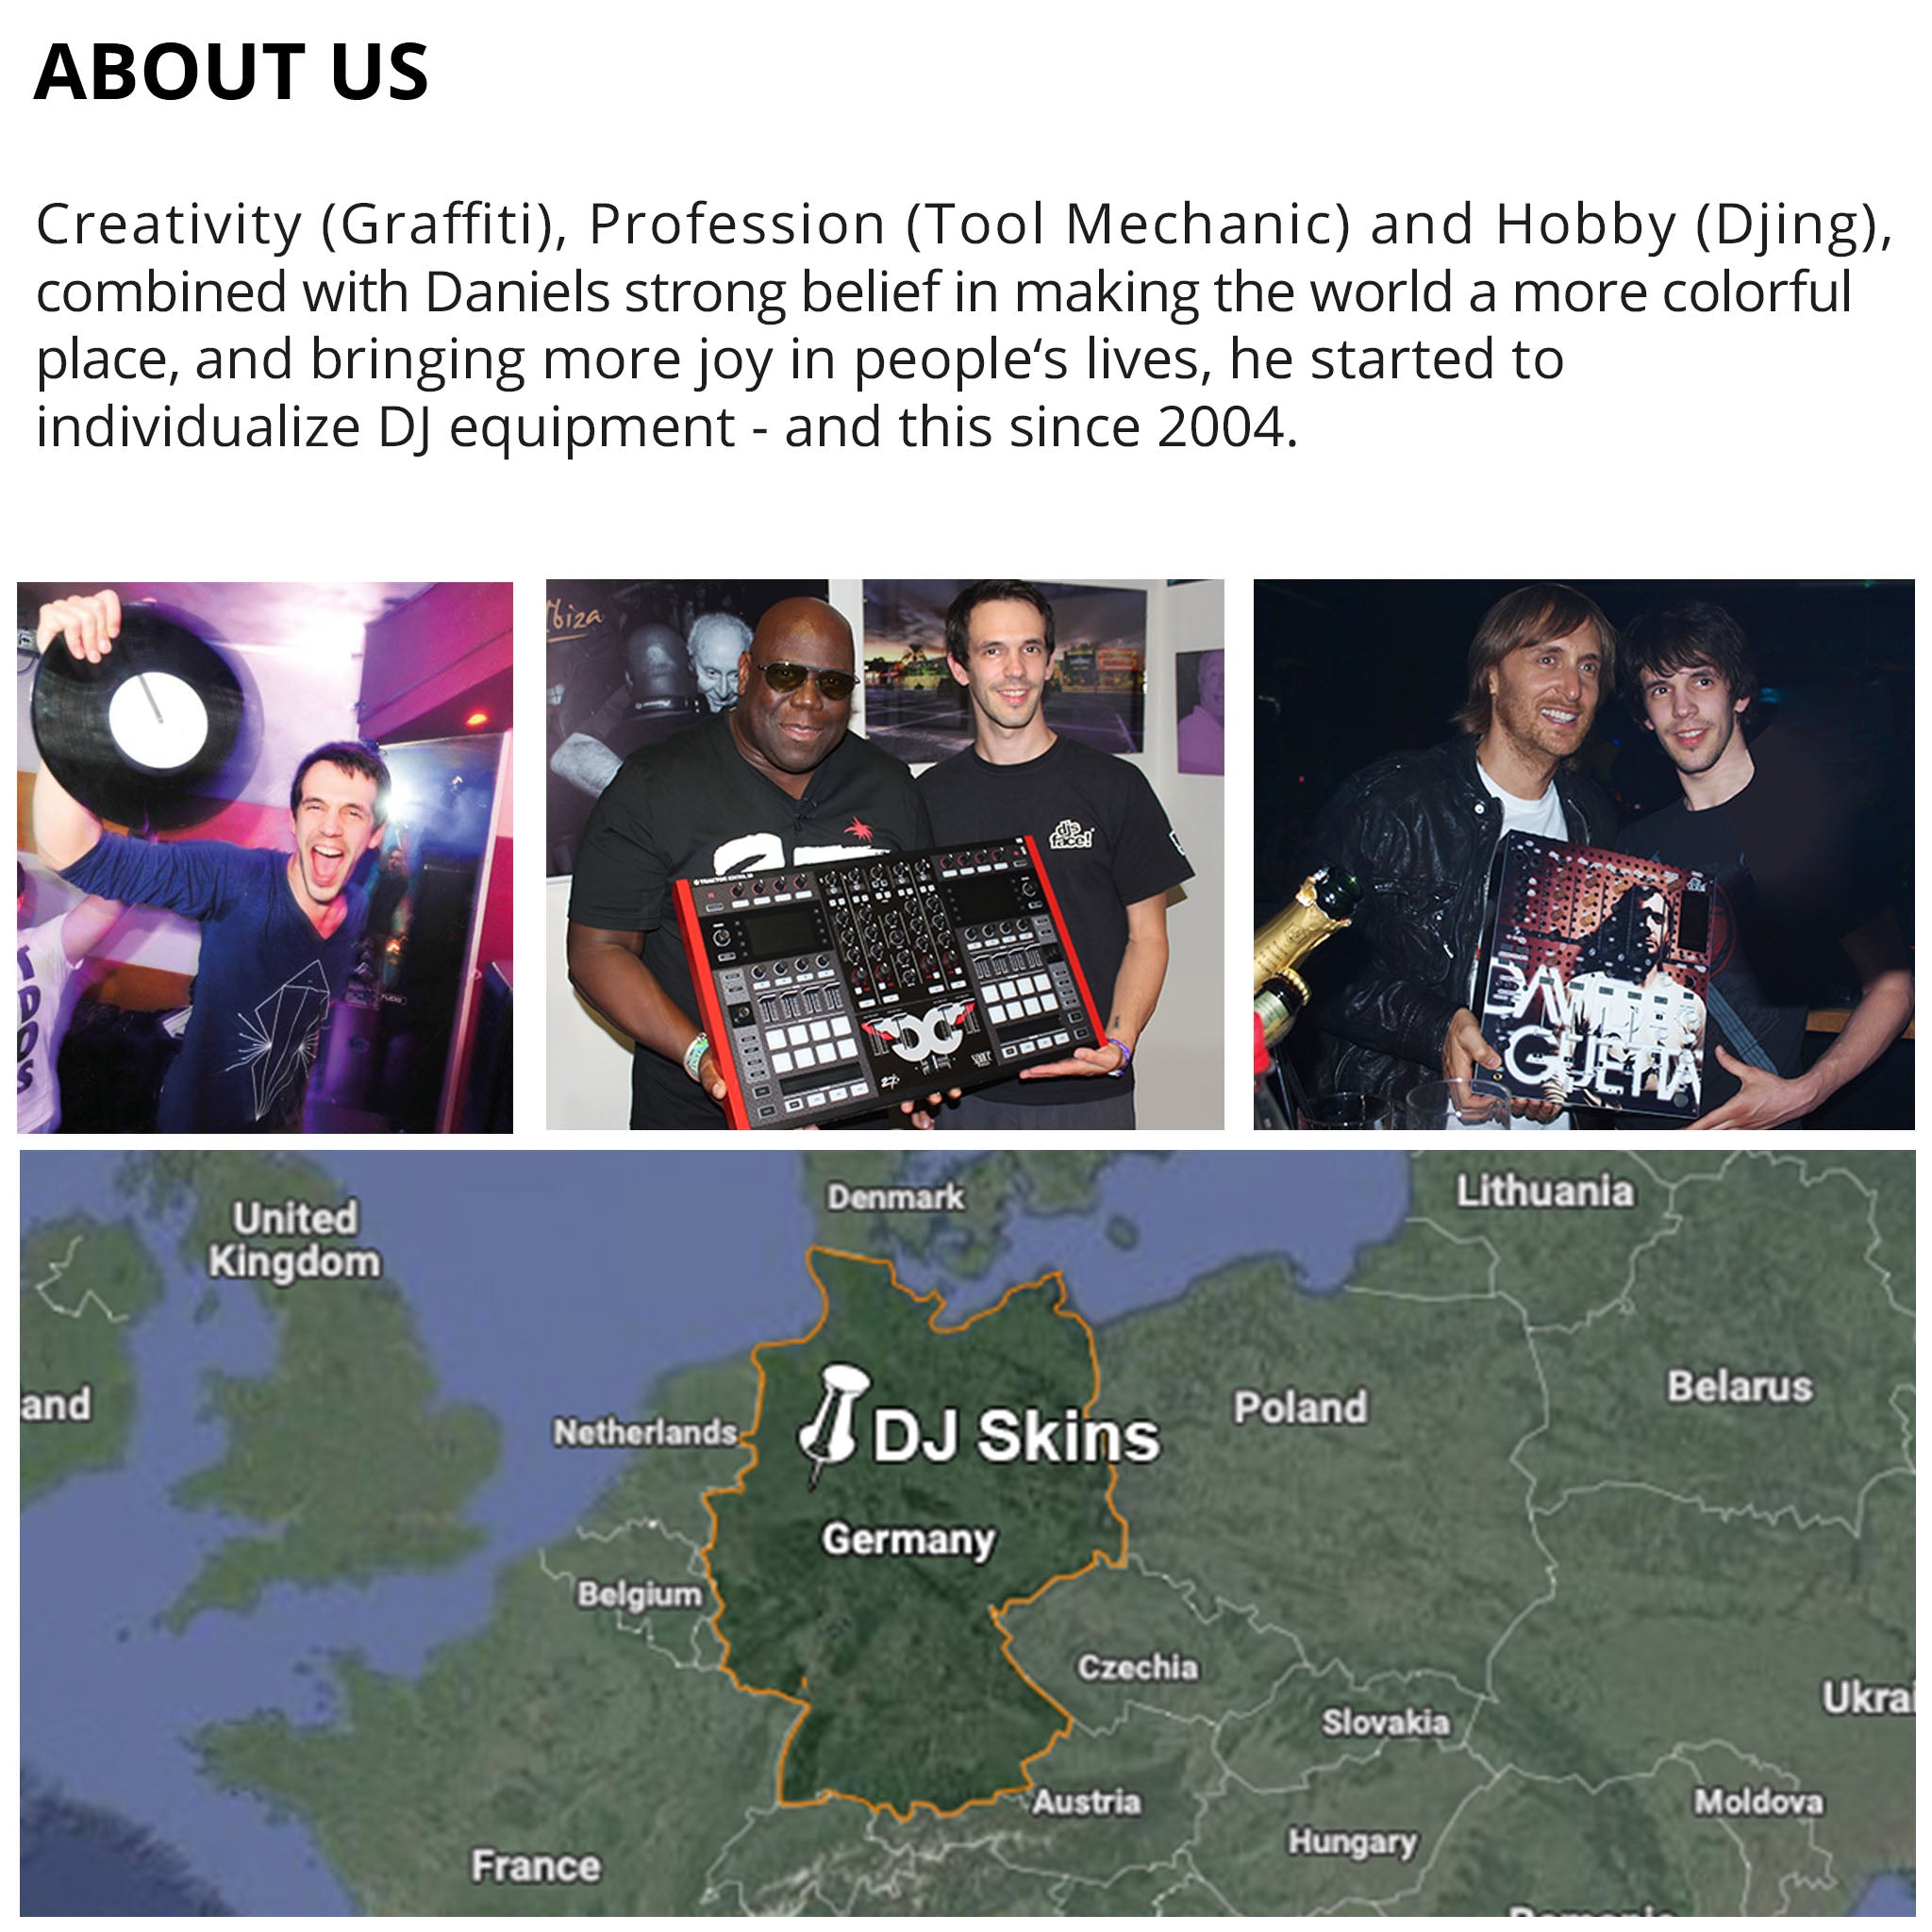 Pioneer DJ DJM S9 Skin Monarchy